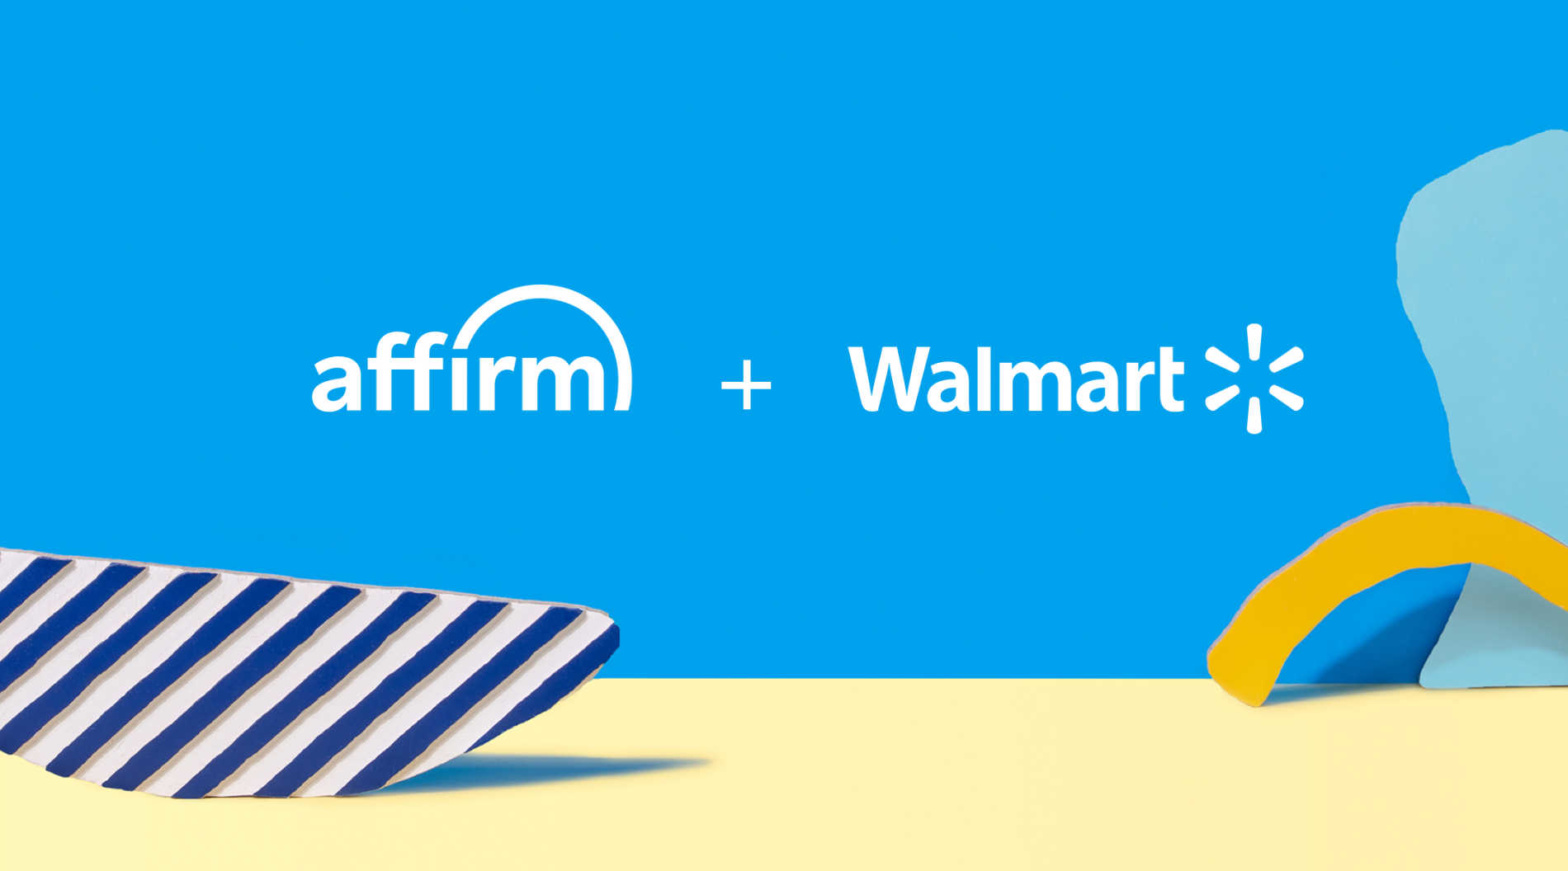 Describe Blog Post on Walmart and Affirm Partnership